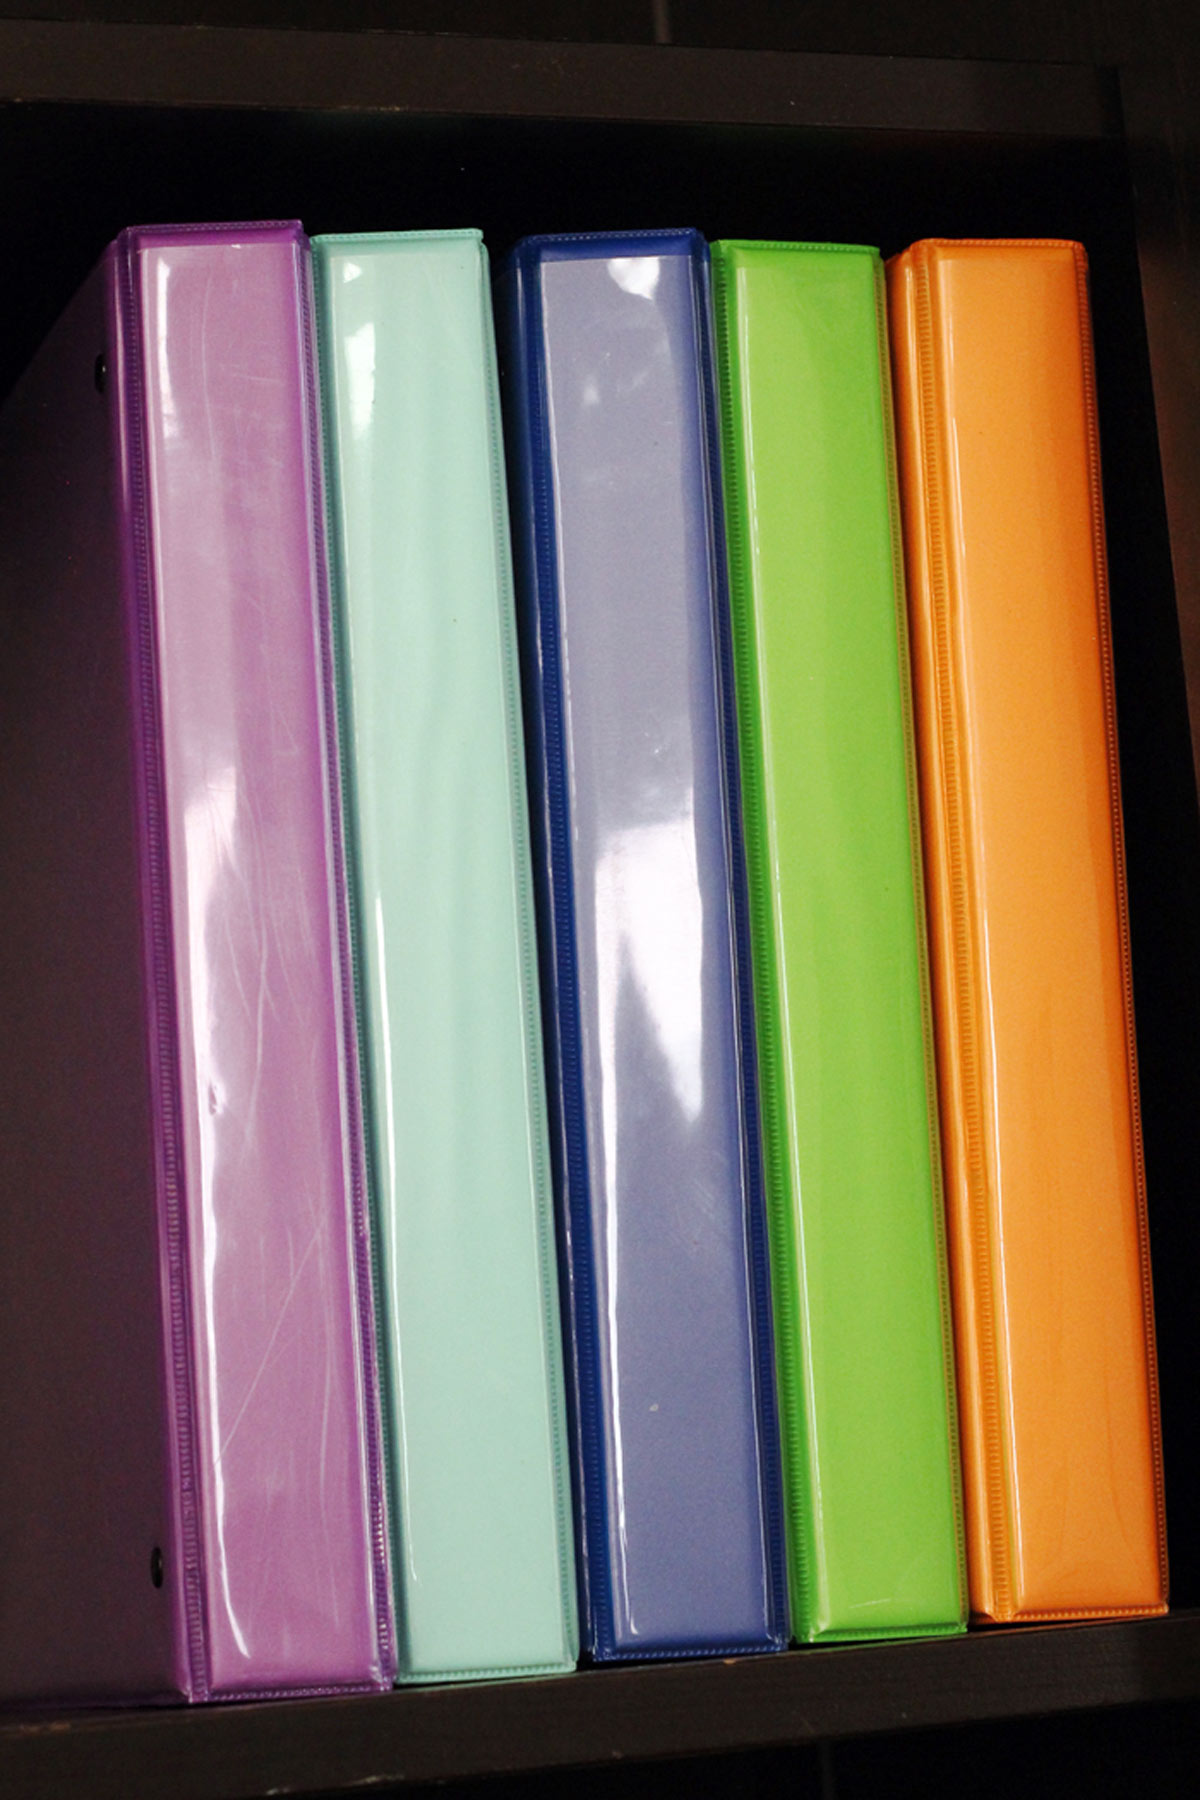 colored binders on a black bookshelf.